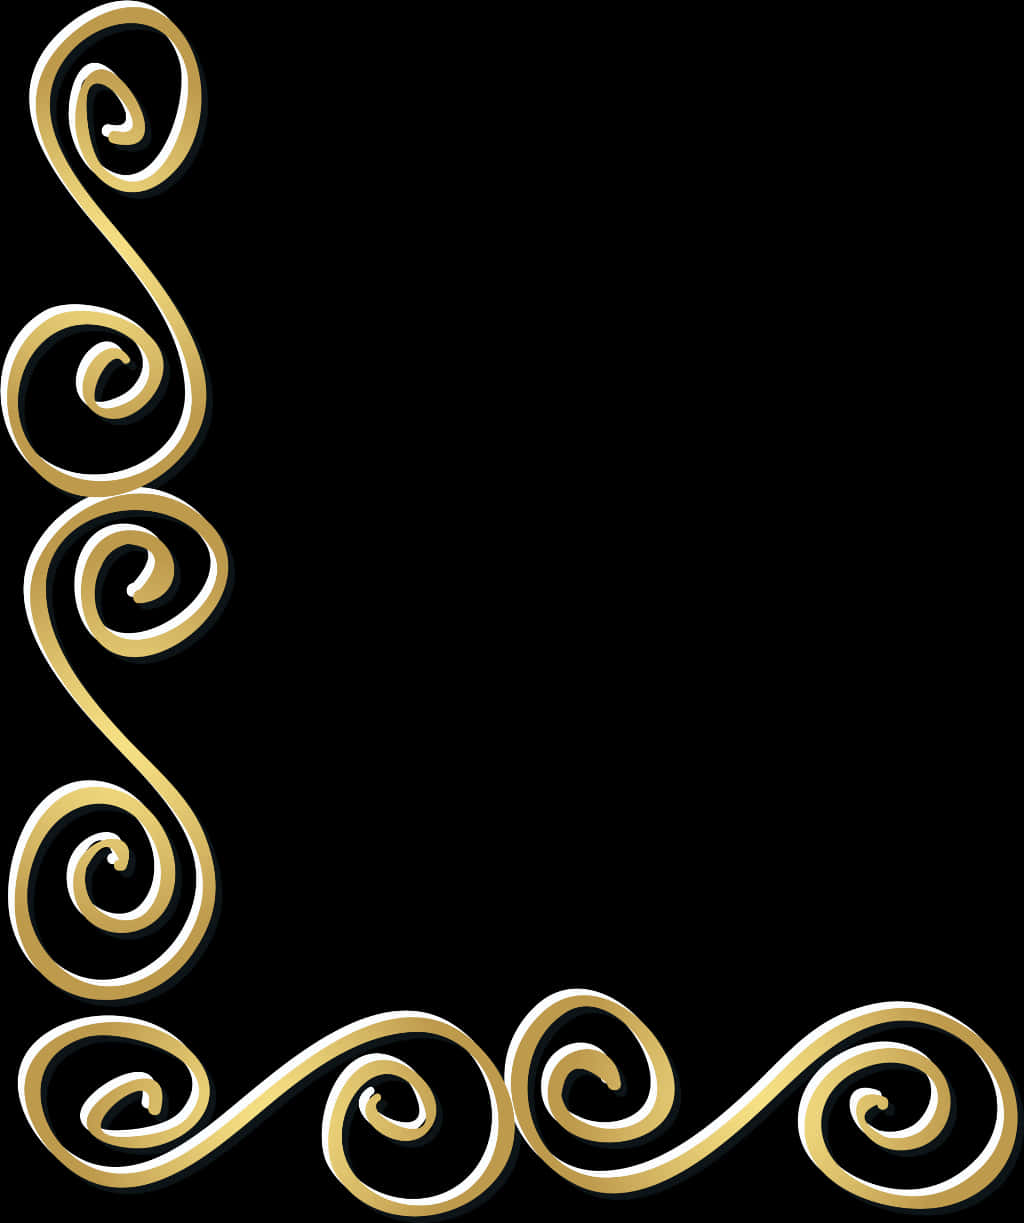 Elegant Gold Swirls Border Design